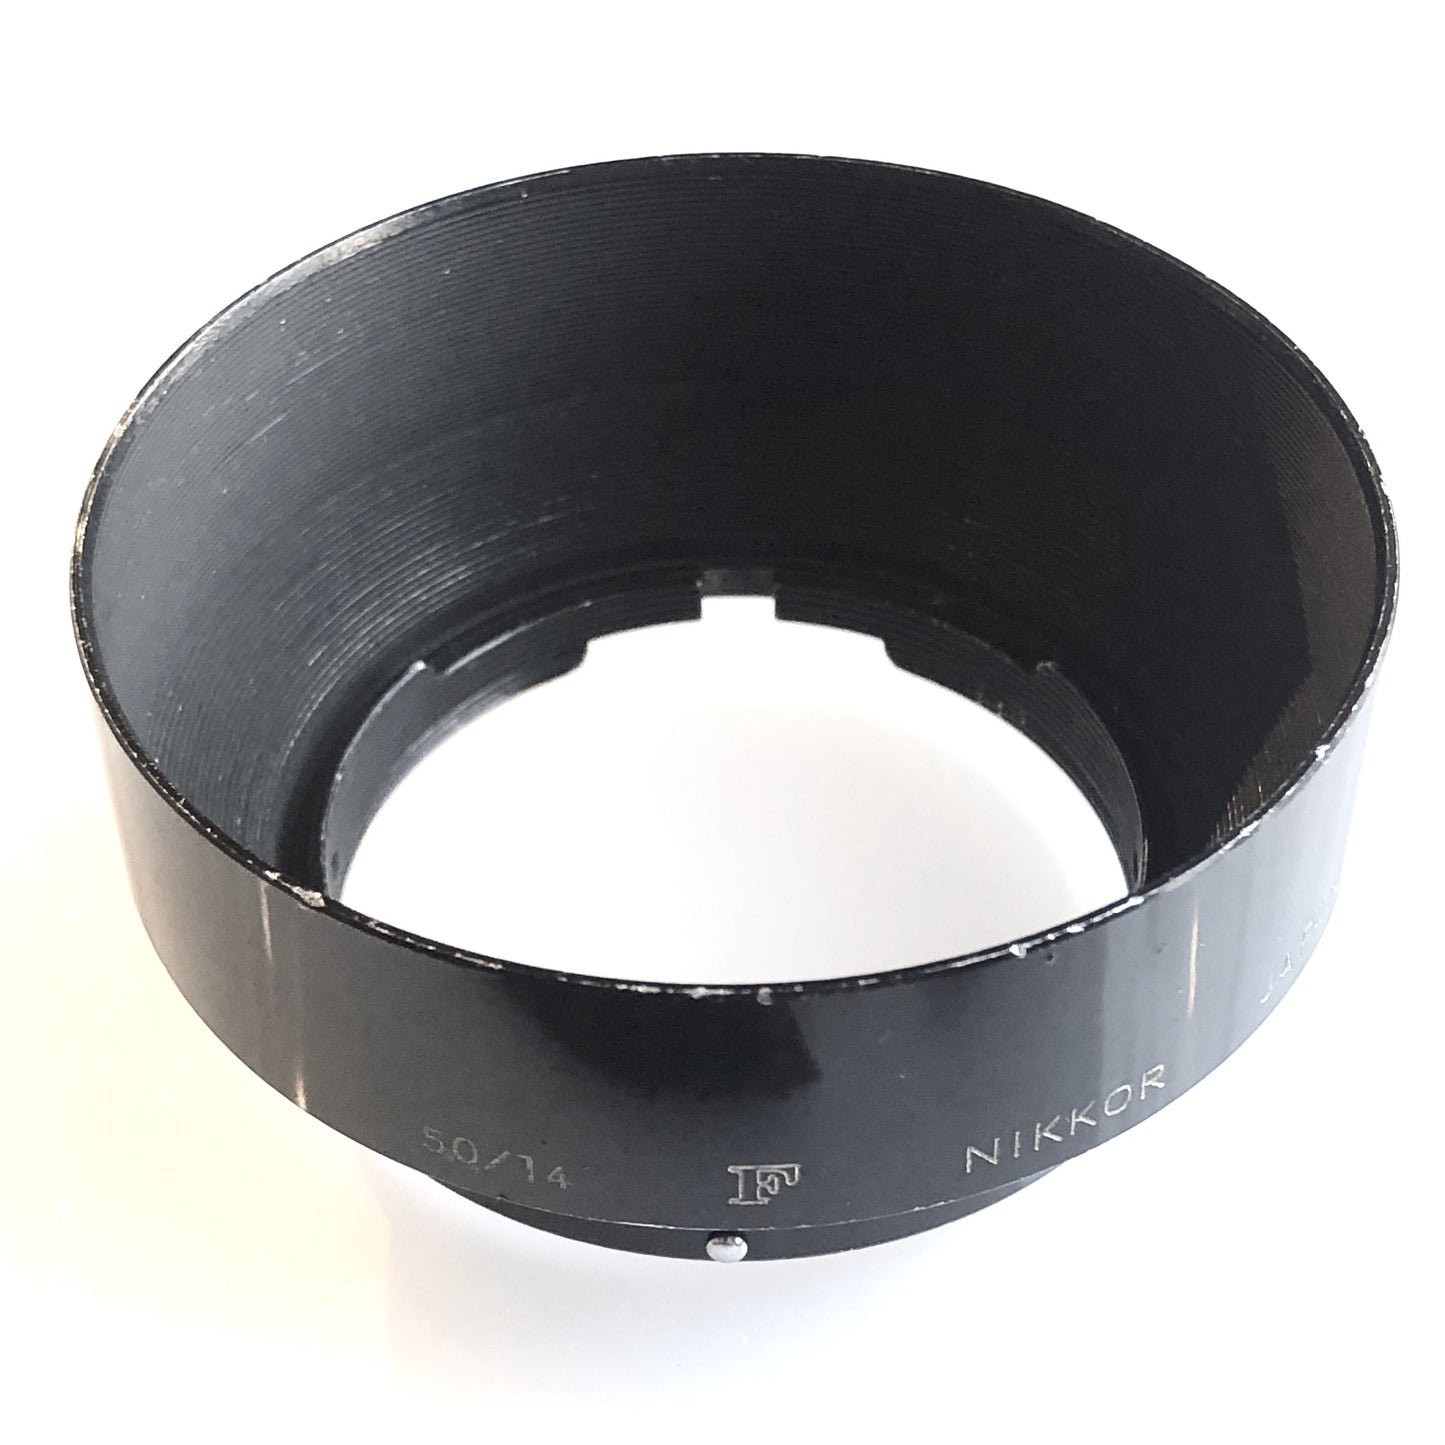 Nikon lens hood for 50mm f1.4